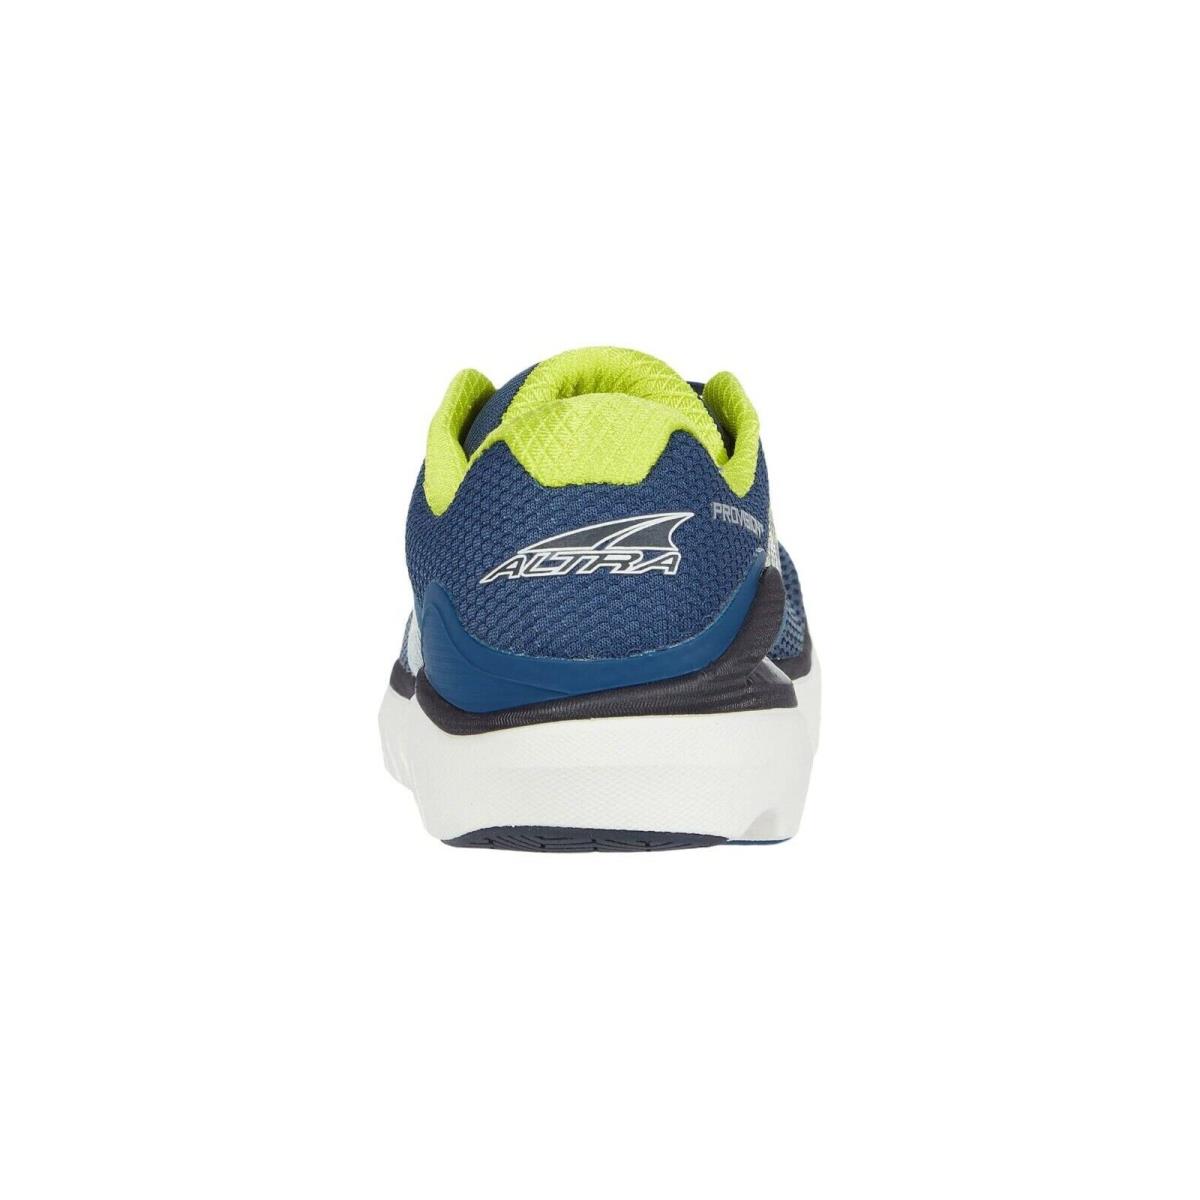 Altra shoes Provision - Blue/Lime , Blue/Lime Manufacturer 4